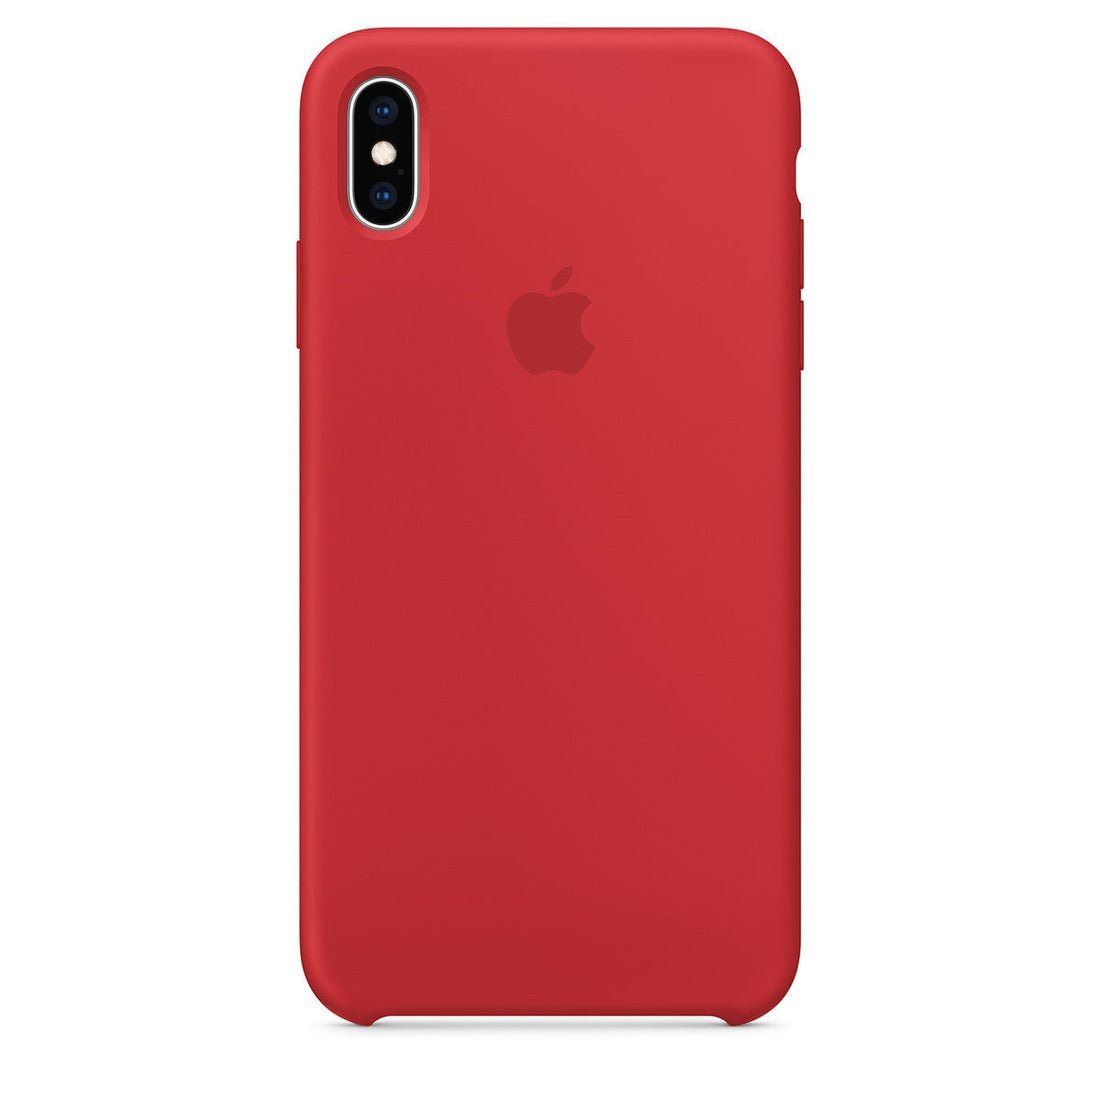 Husa Silicon Apple pt. iPhone XS Max Red - MRWH2ZM/A Originala - 190198763280 - 1